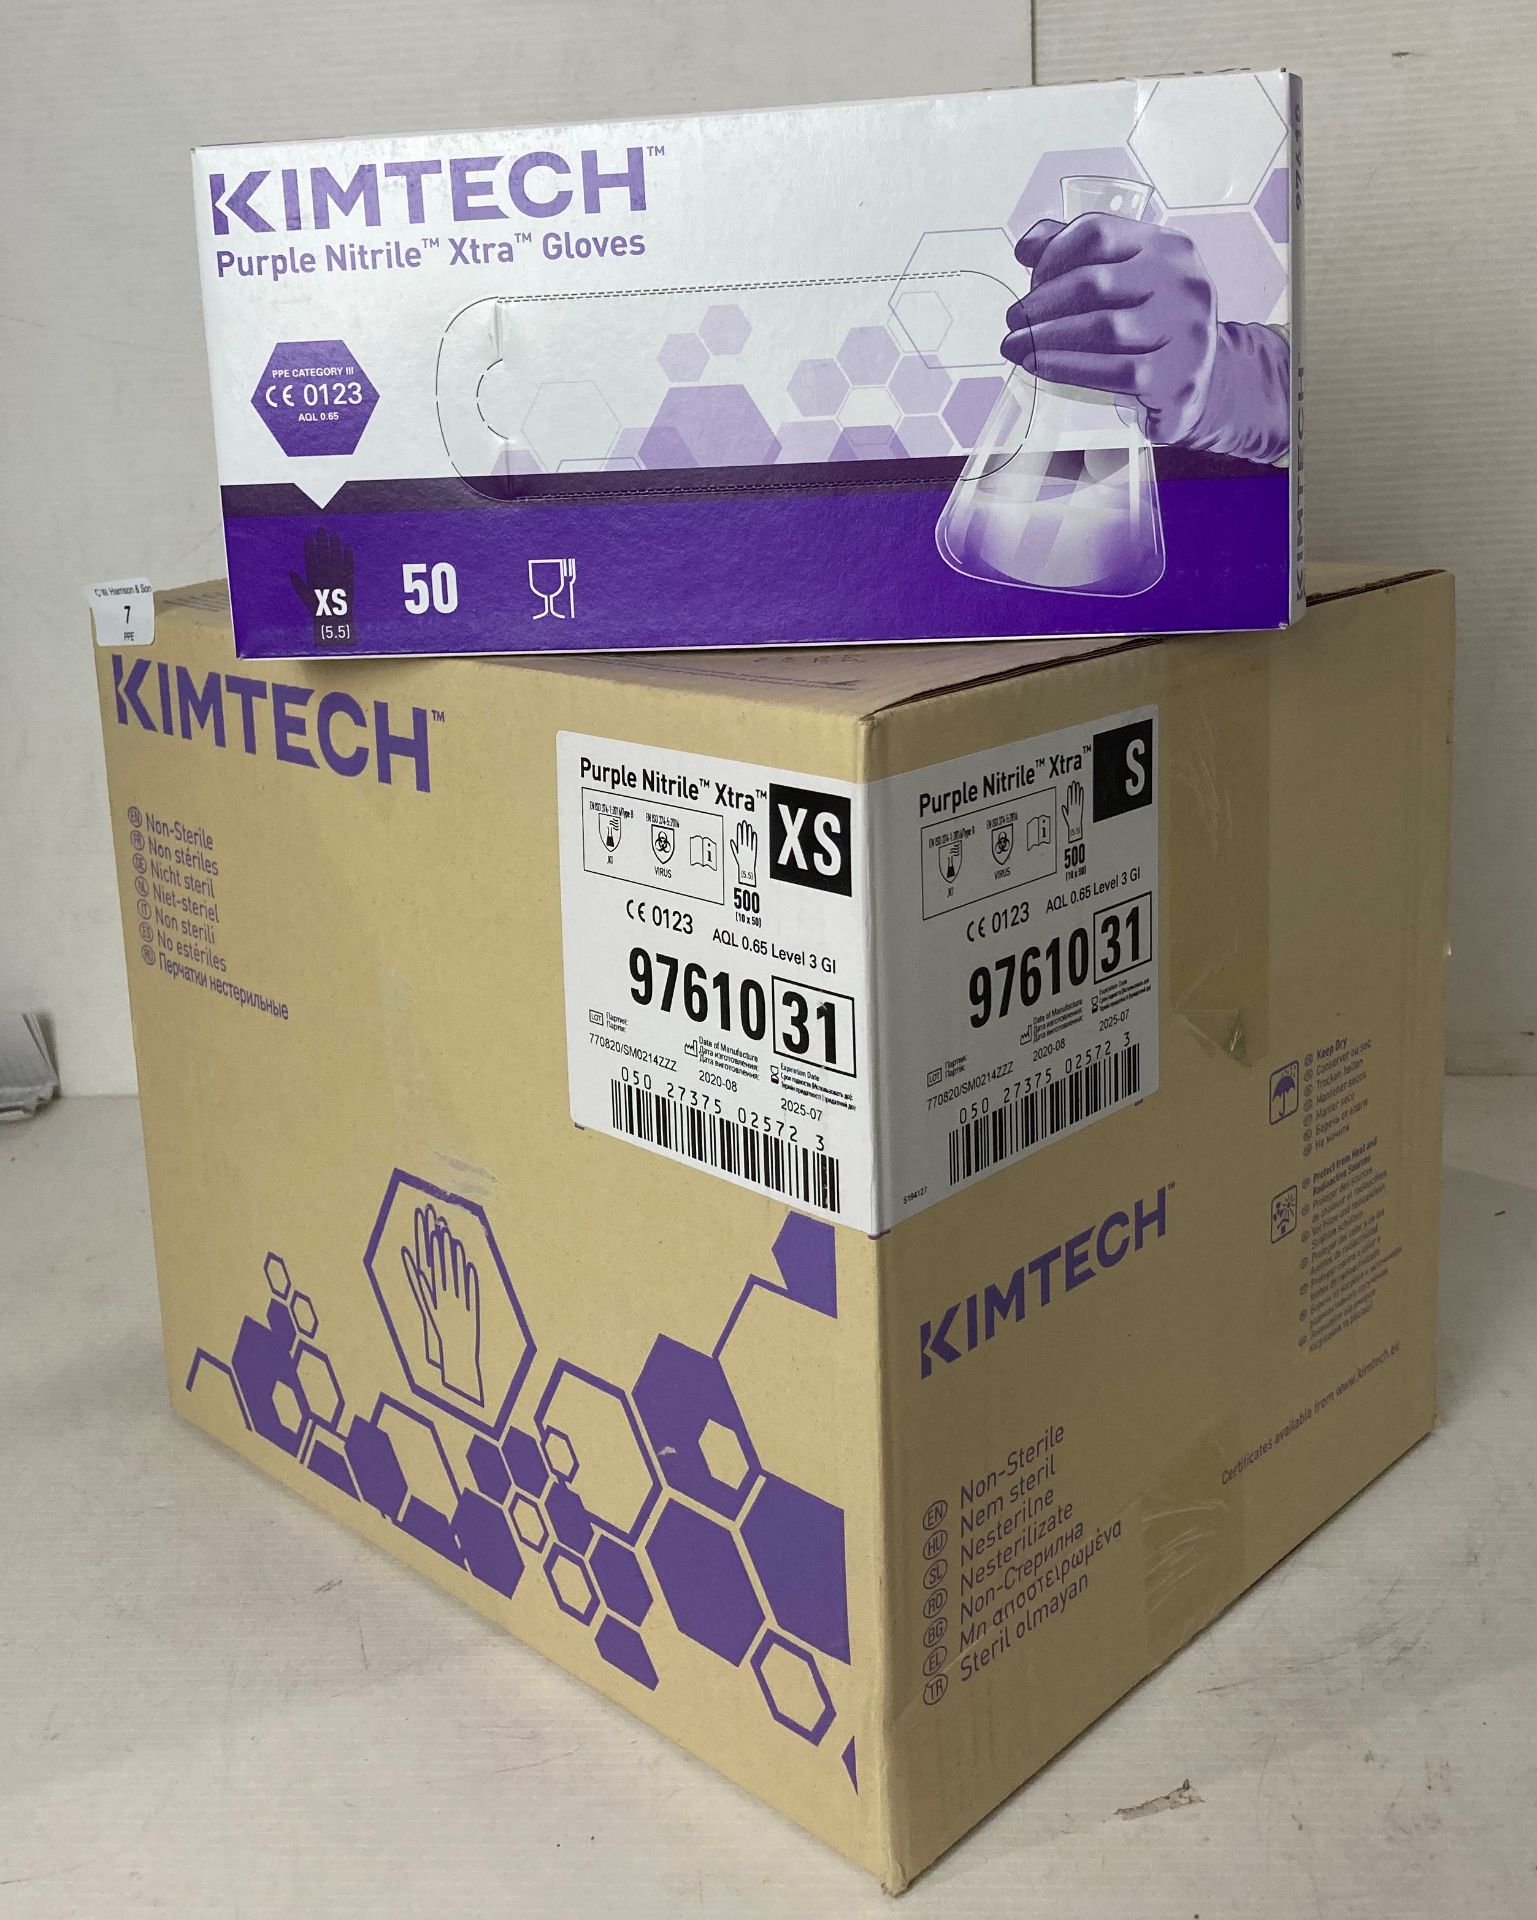 10 boxes of (1 outer box) Kimtech Nitrile gloves - size XS